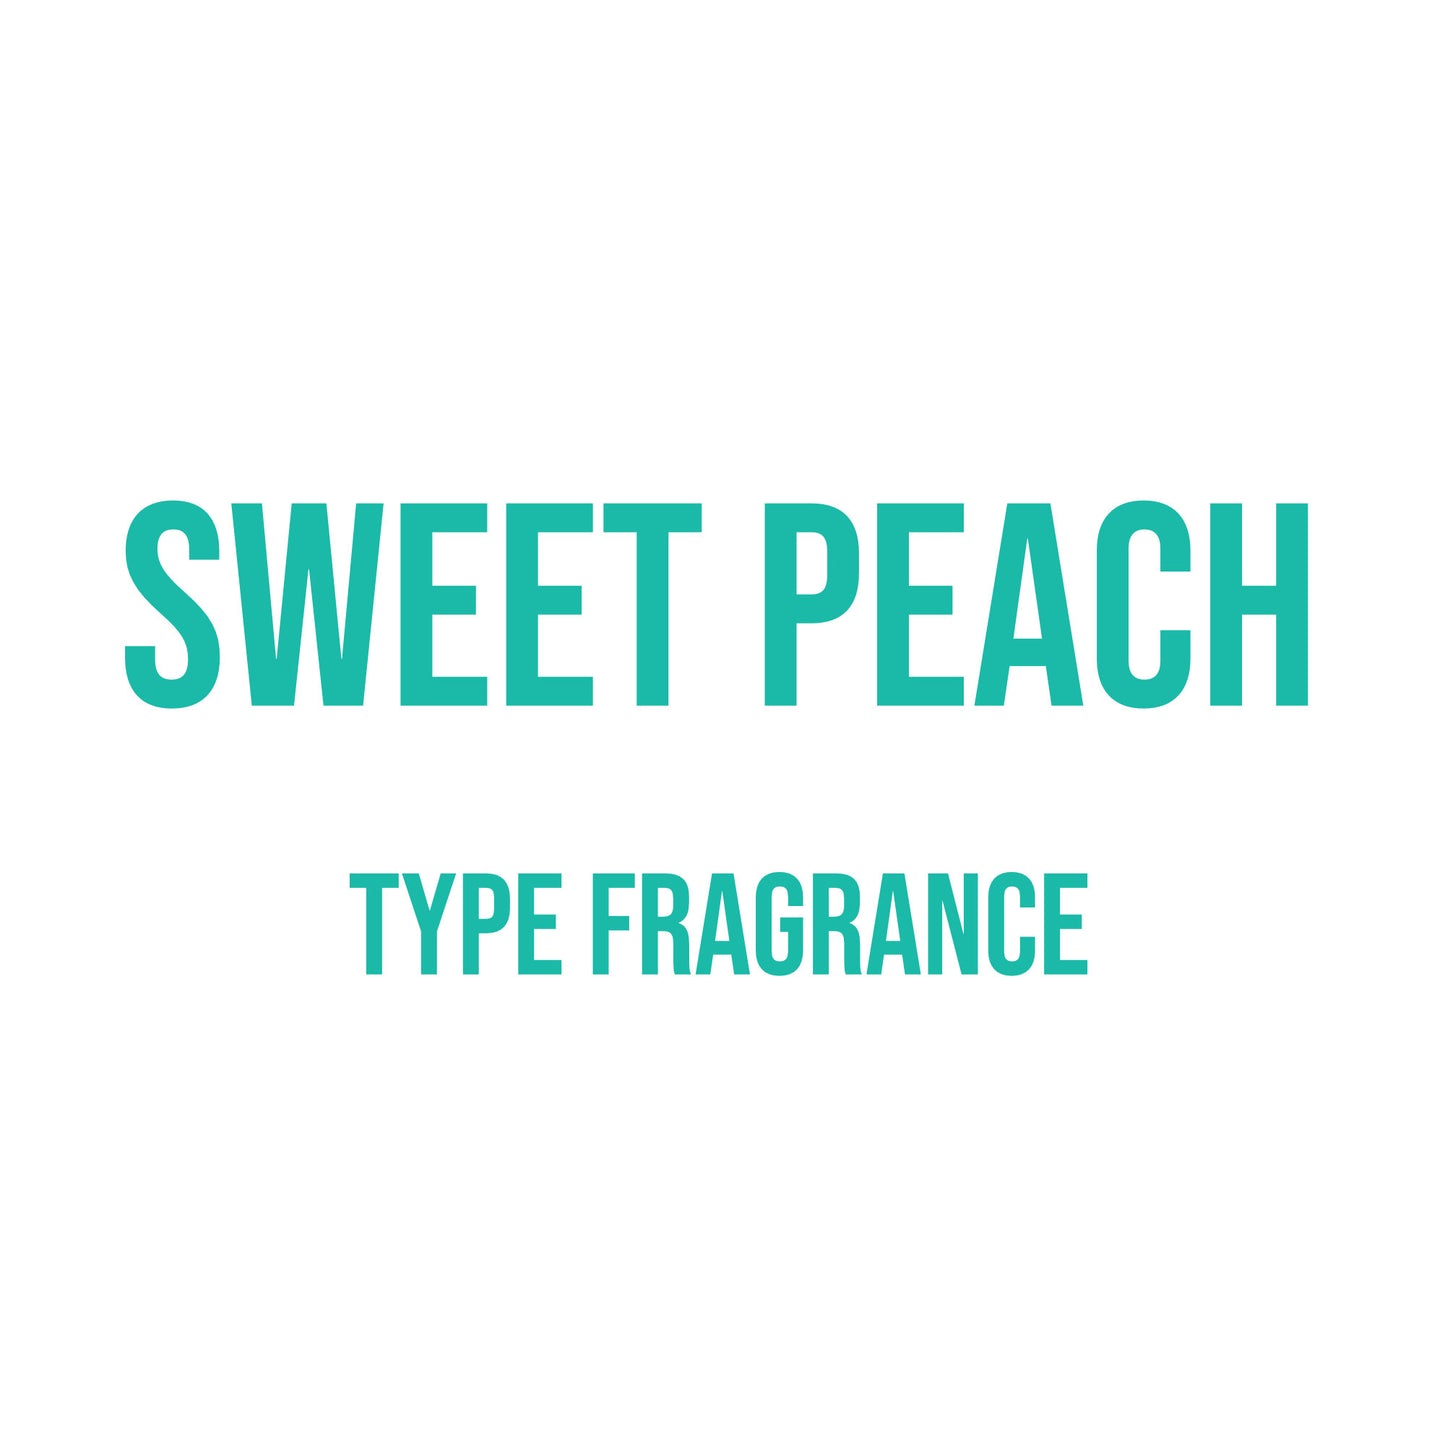 Sweet Peach Type Fragrance